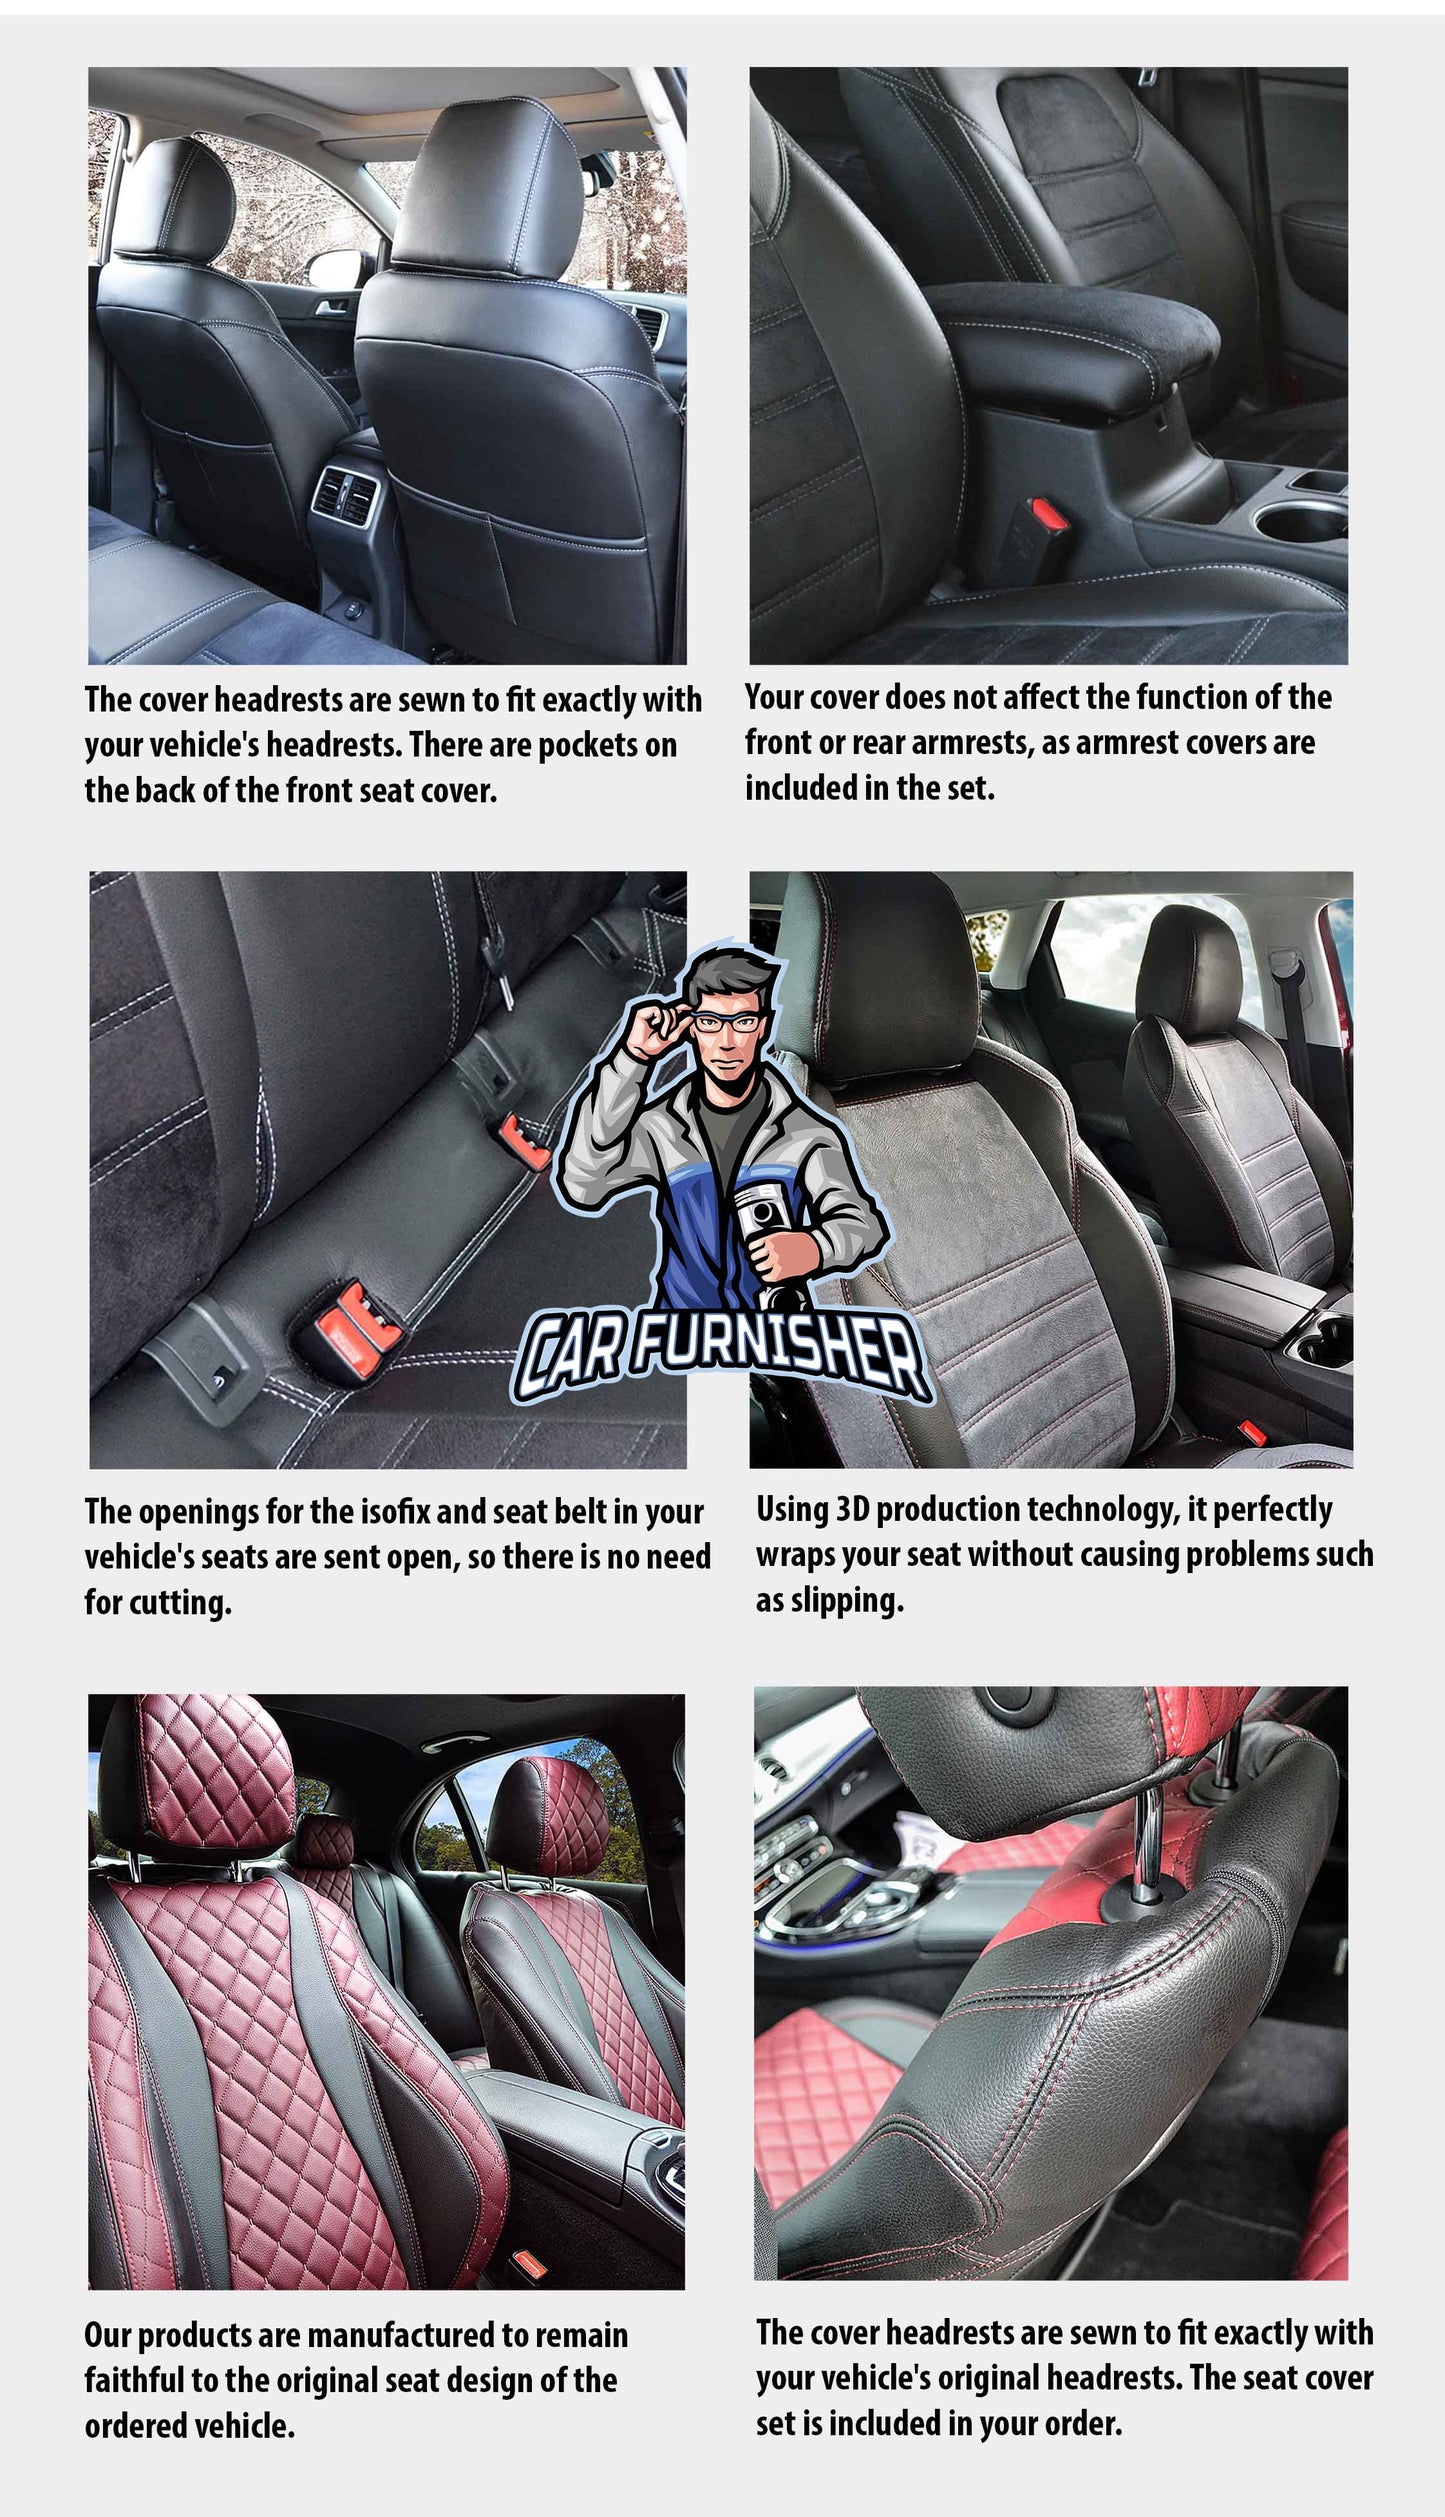 Toyota Prius Seat Cover Camouflage Waterproof Design Sahara Camo Waterproof Fabric